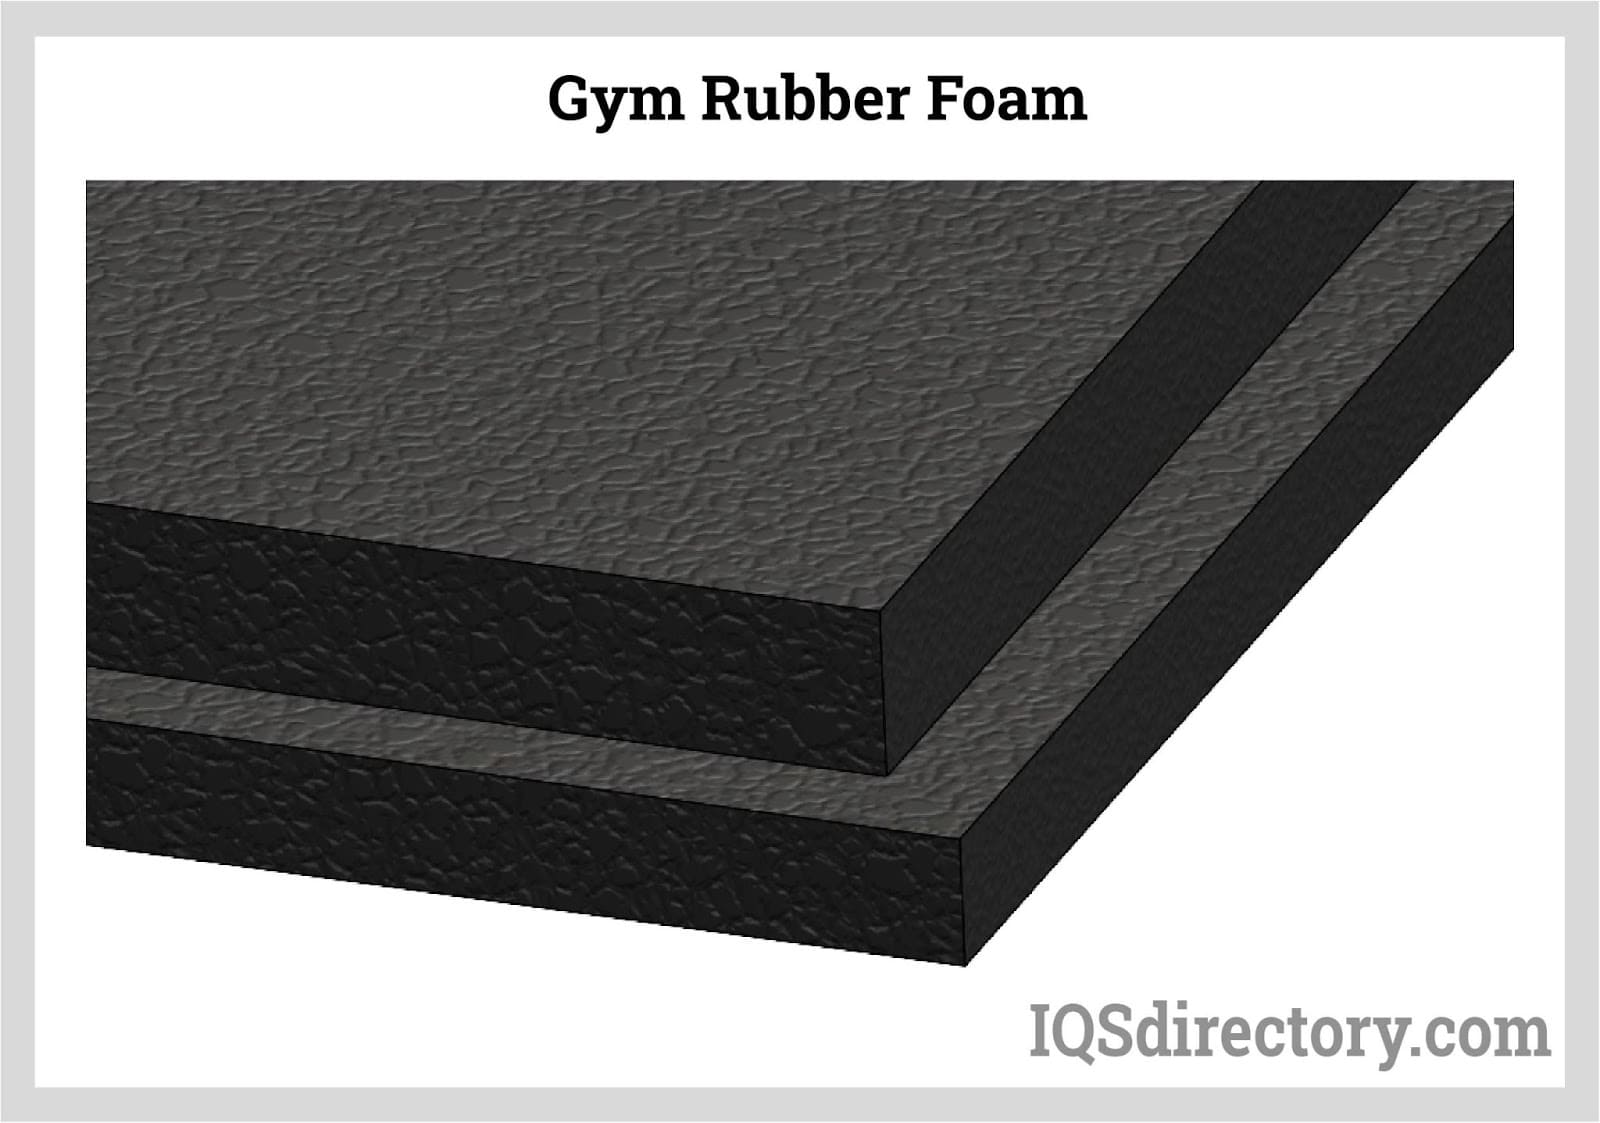 Gym Rubber Foam